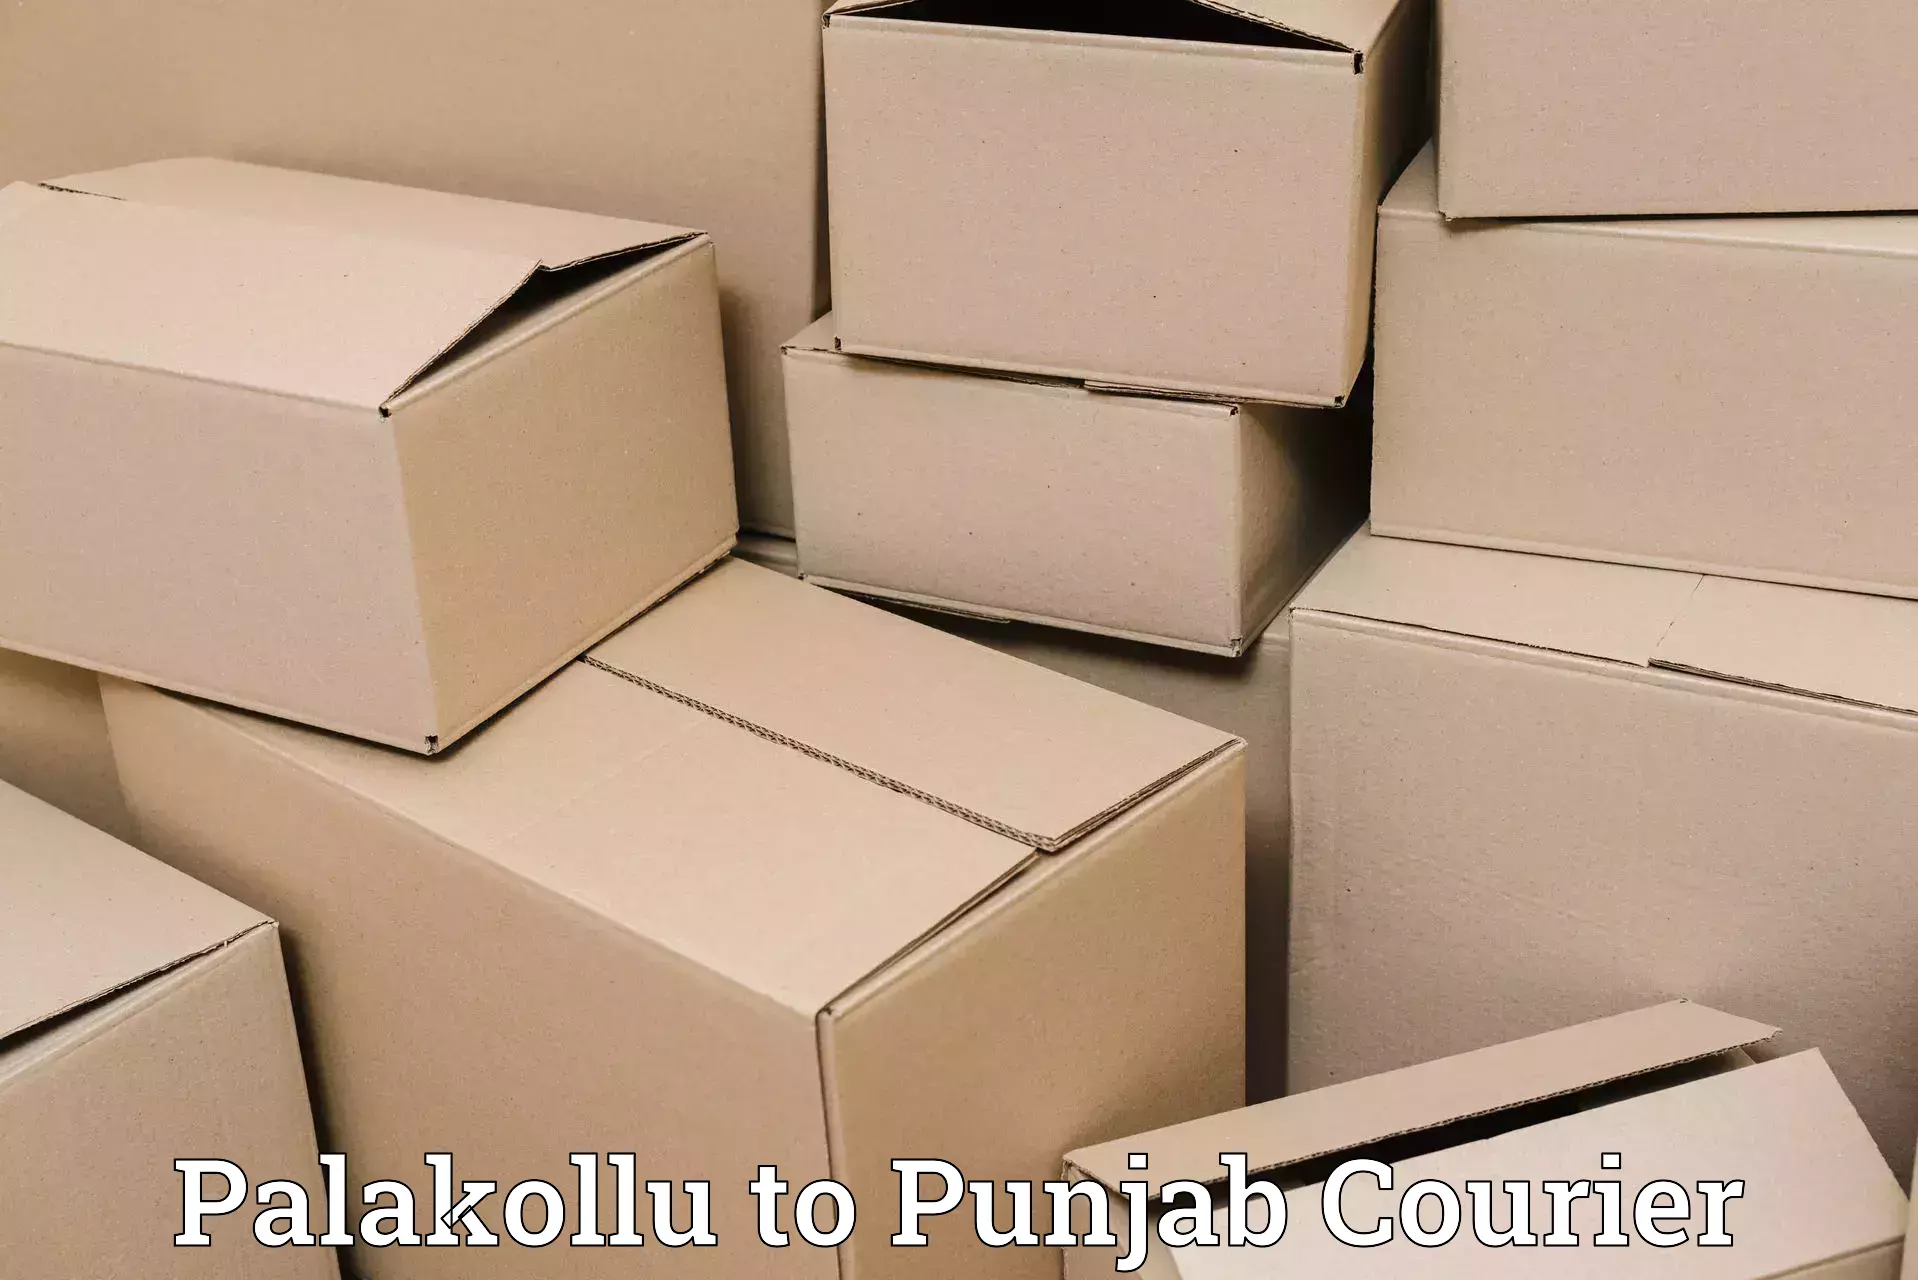 Urgent courier needs Palakollu to Punjab